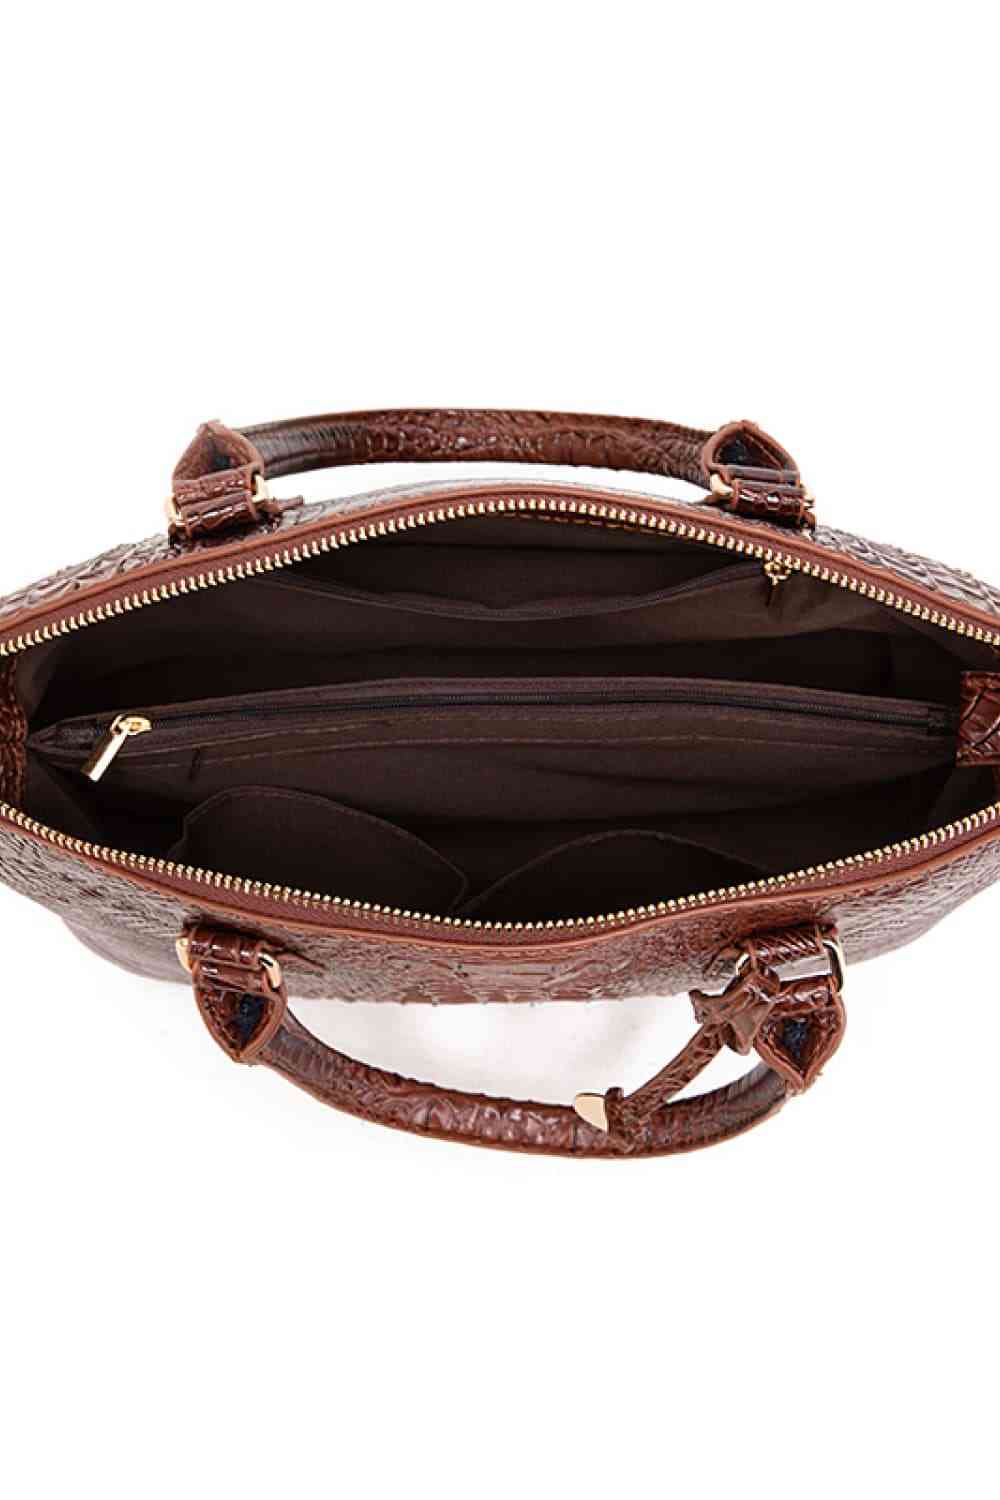 PU Leather Handbag 11 colors